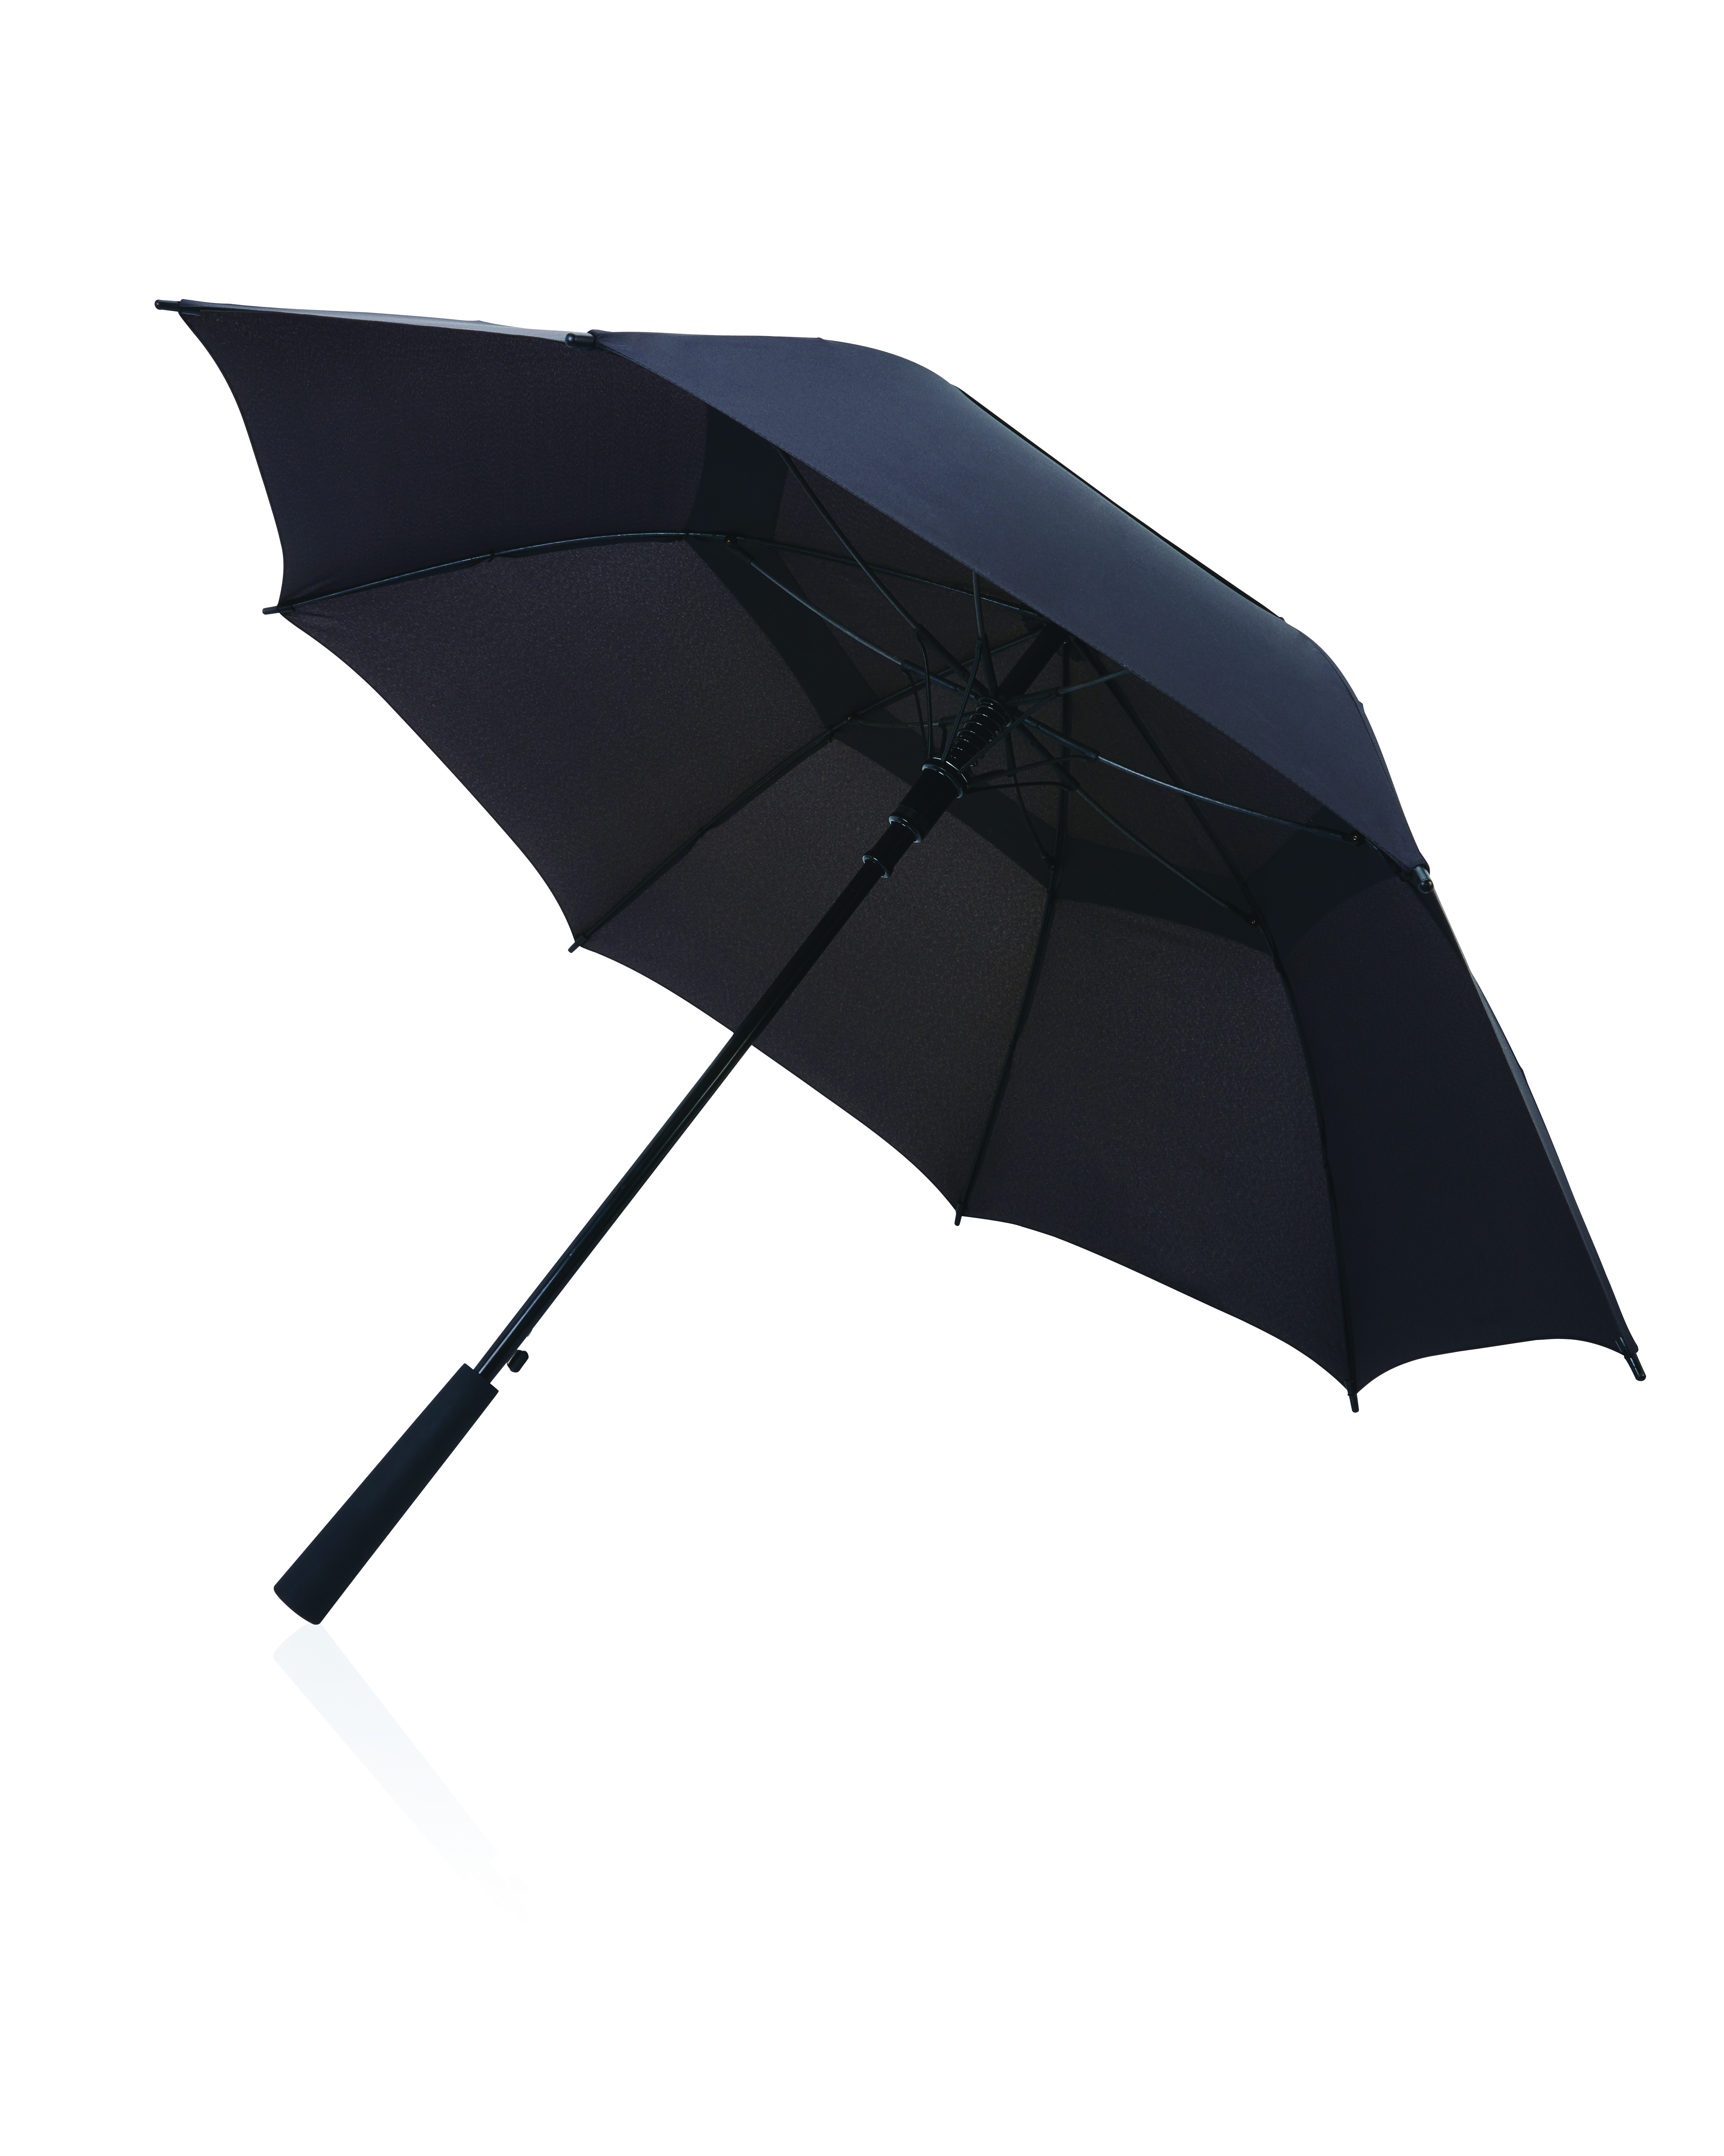 Dual Layered Storm Umbrella - Broughton - Walkerburn